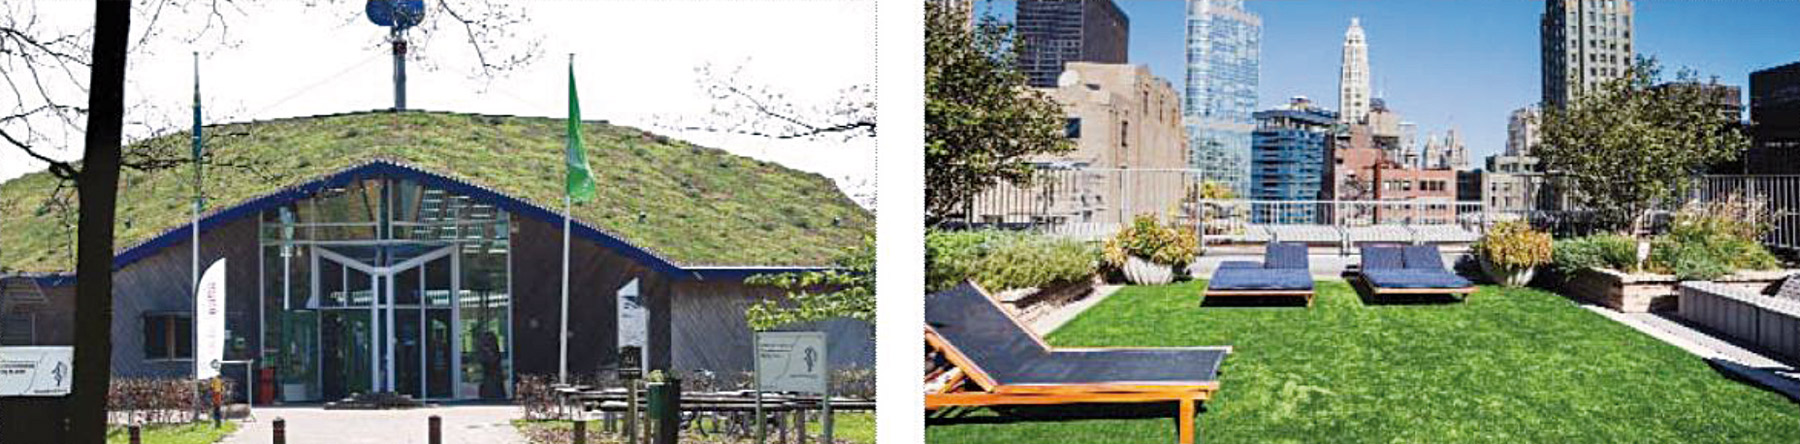 Obr. 1 Extenzívna (vľavo) a intenzívna (vpravo) zelená strecha